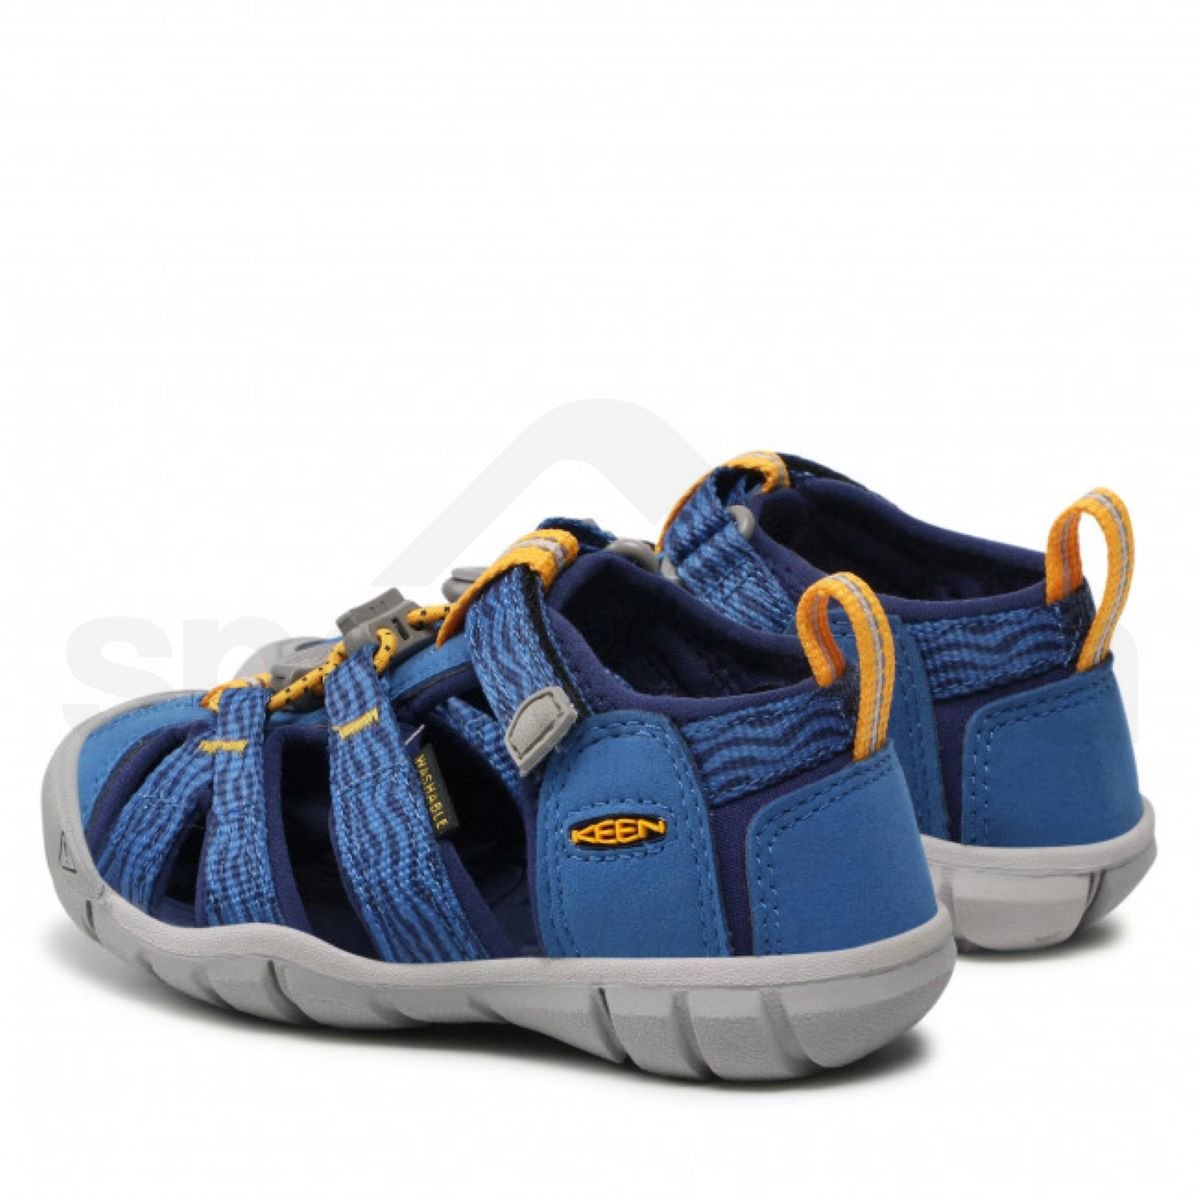 Obuv - sandály Keen Seacamp II CNX K - modrá/oranžová